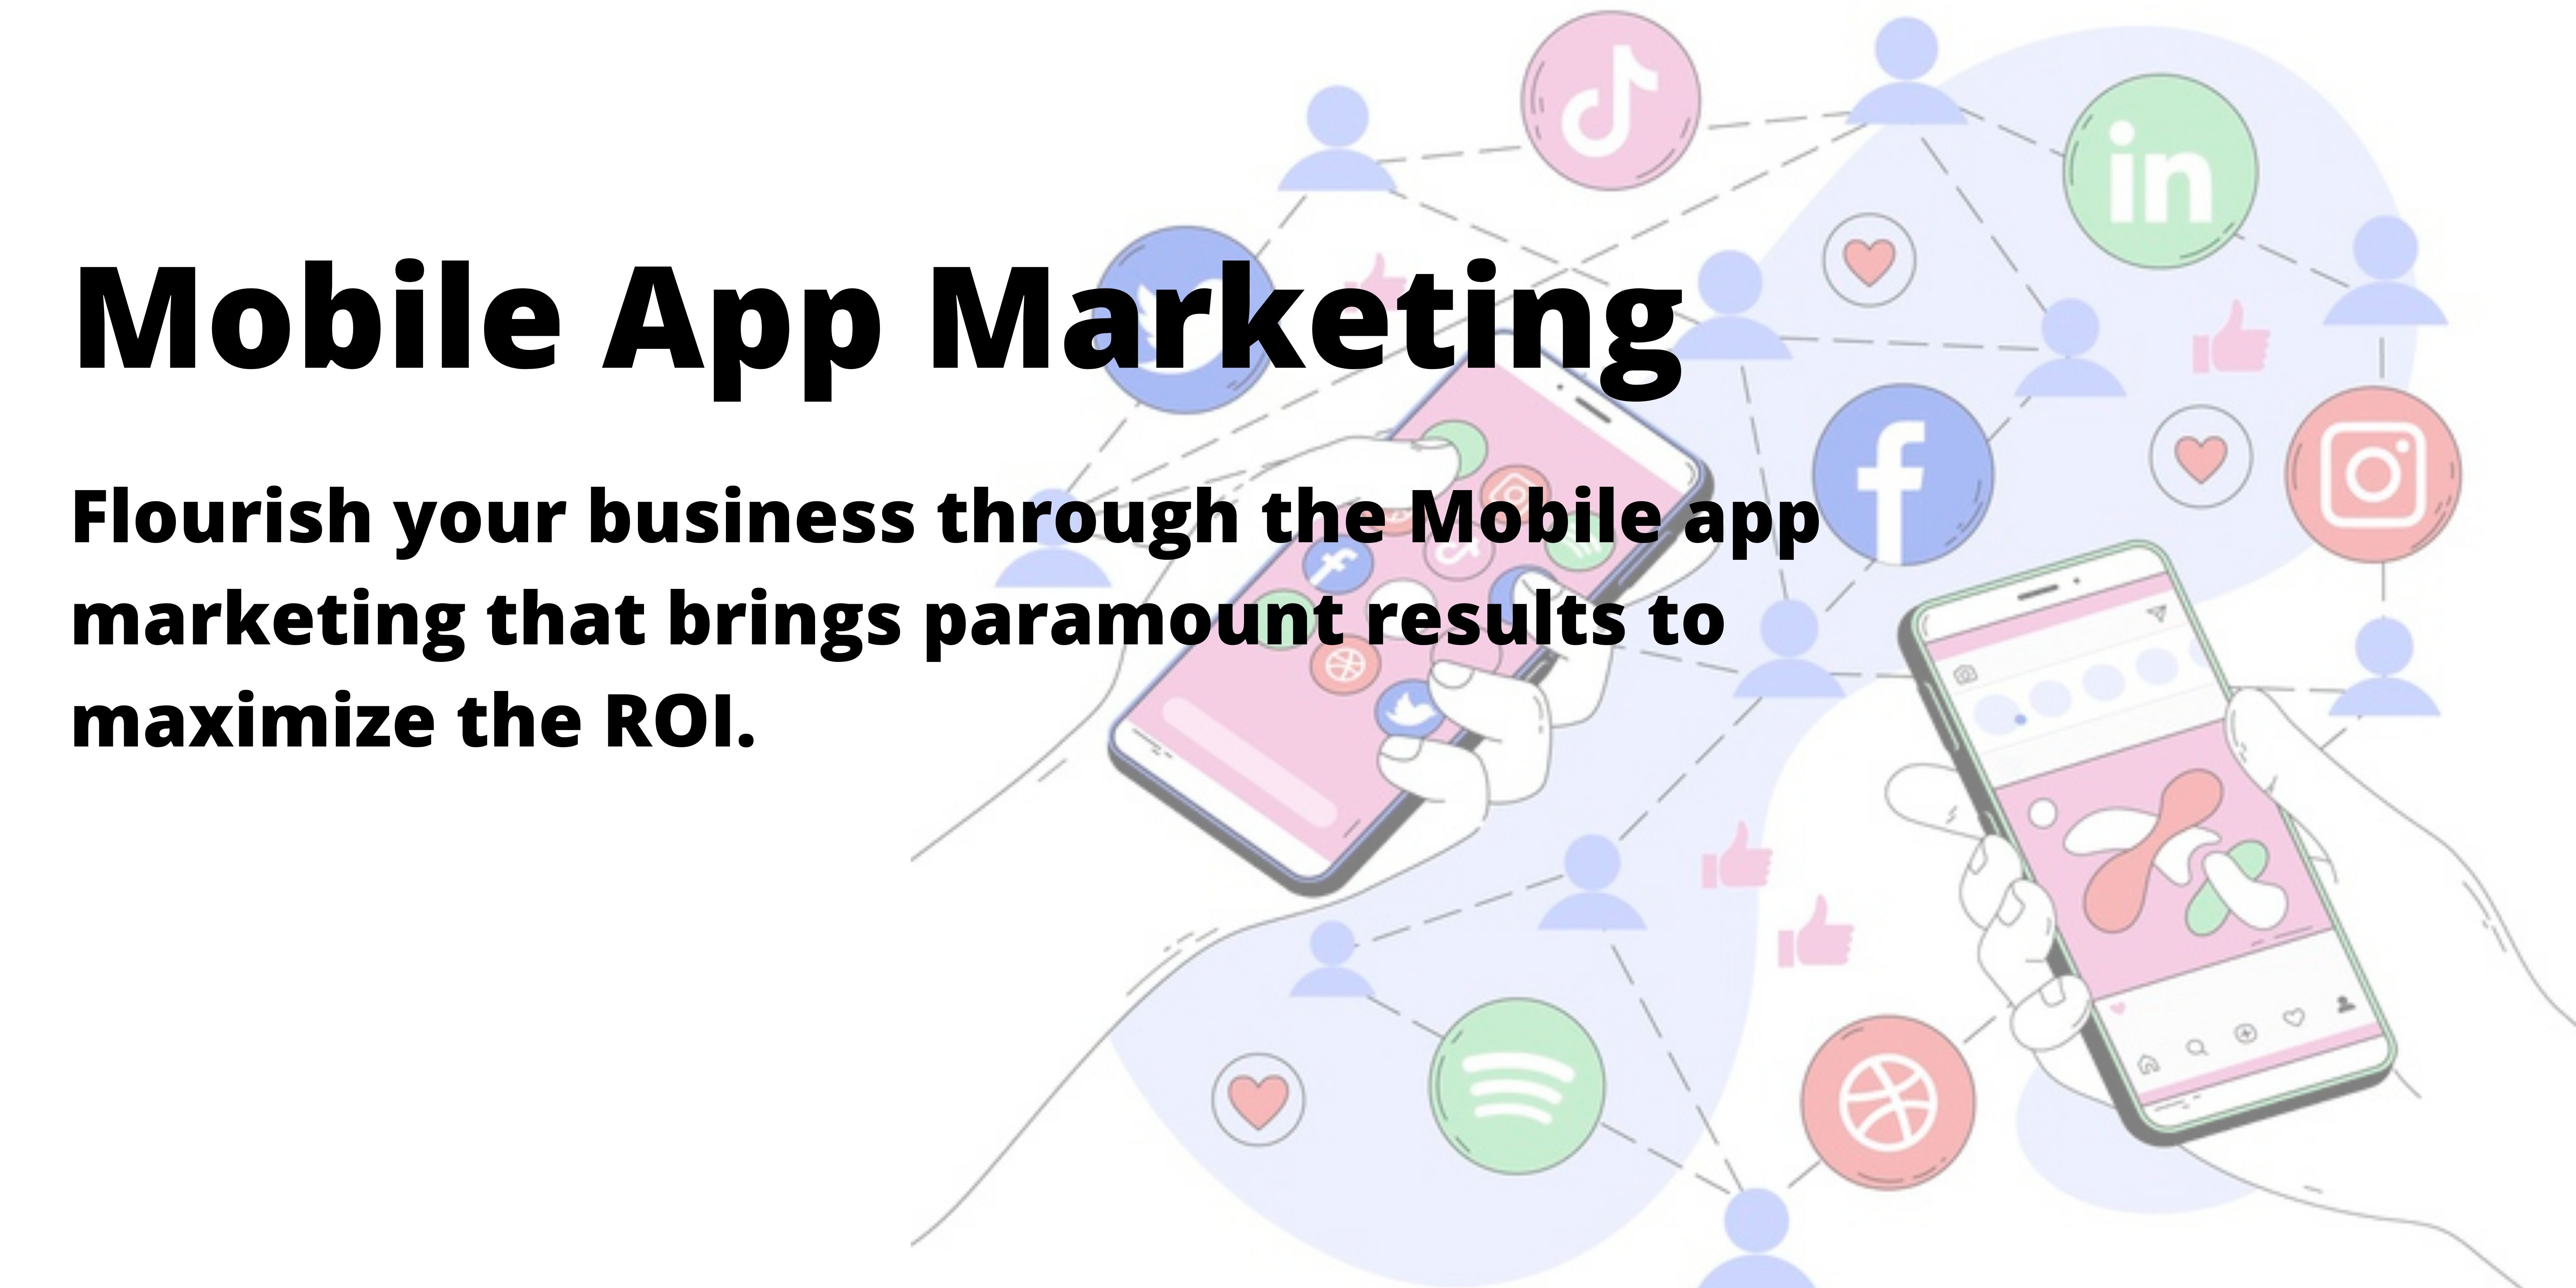 5 Benefits of Mobile App Marketing